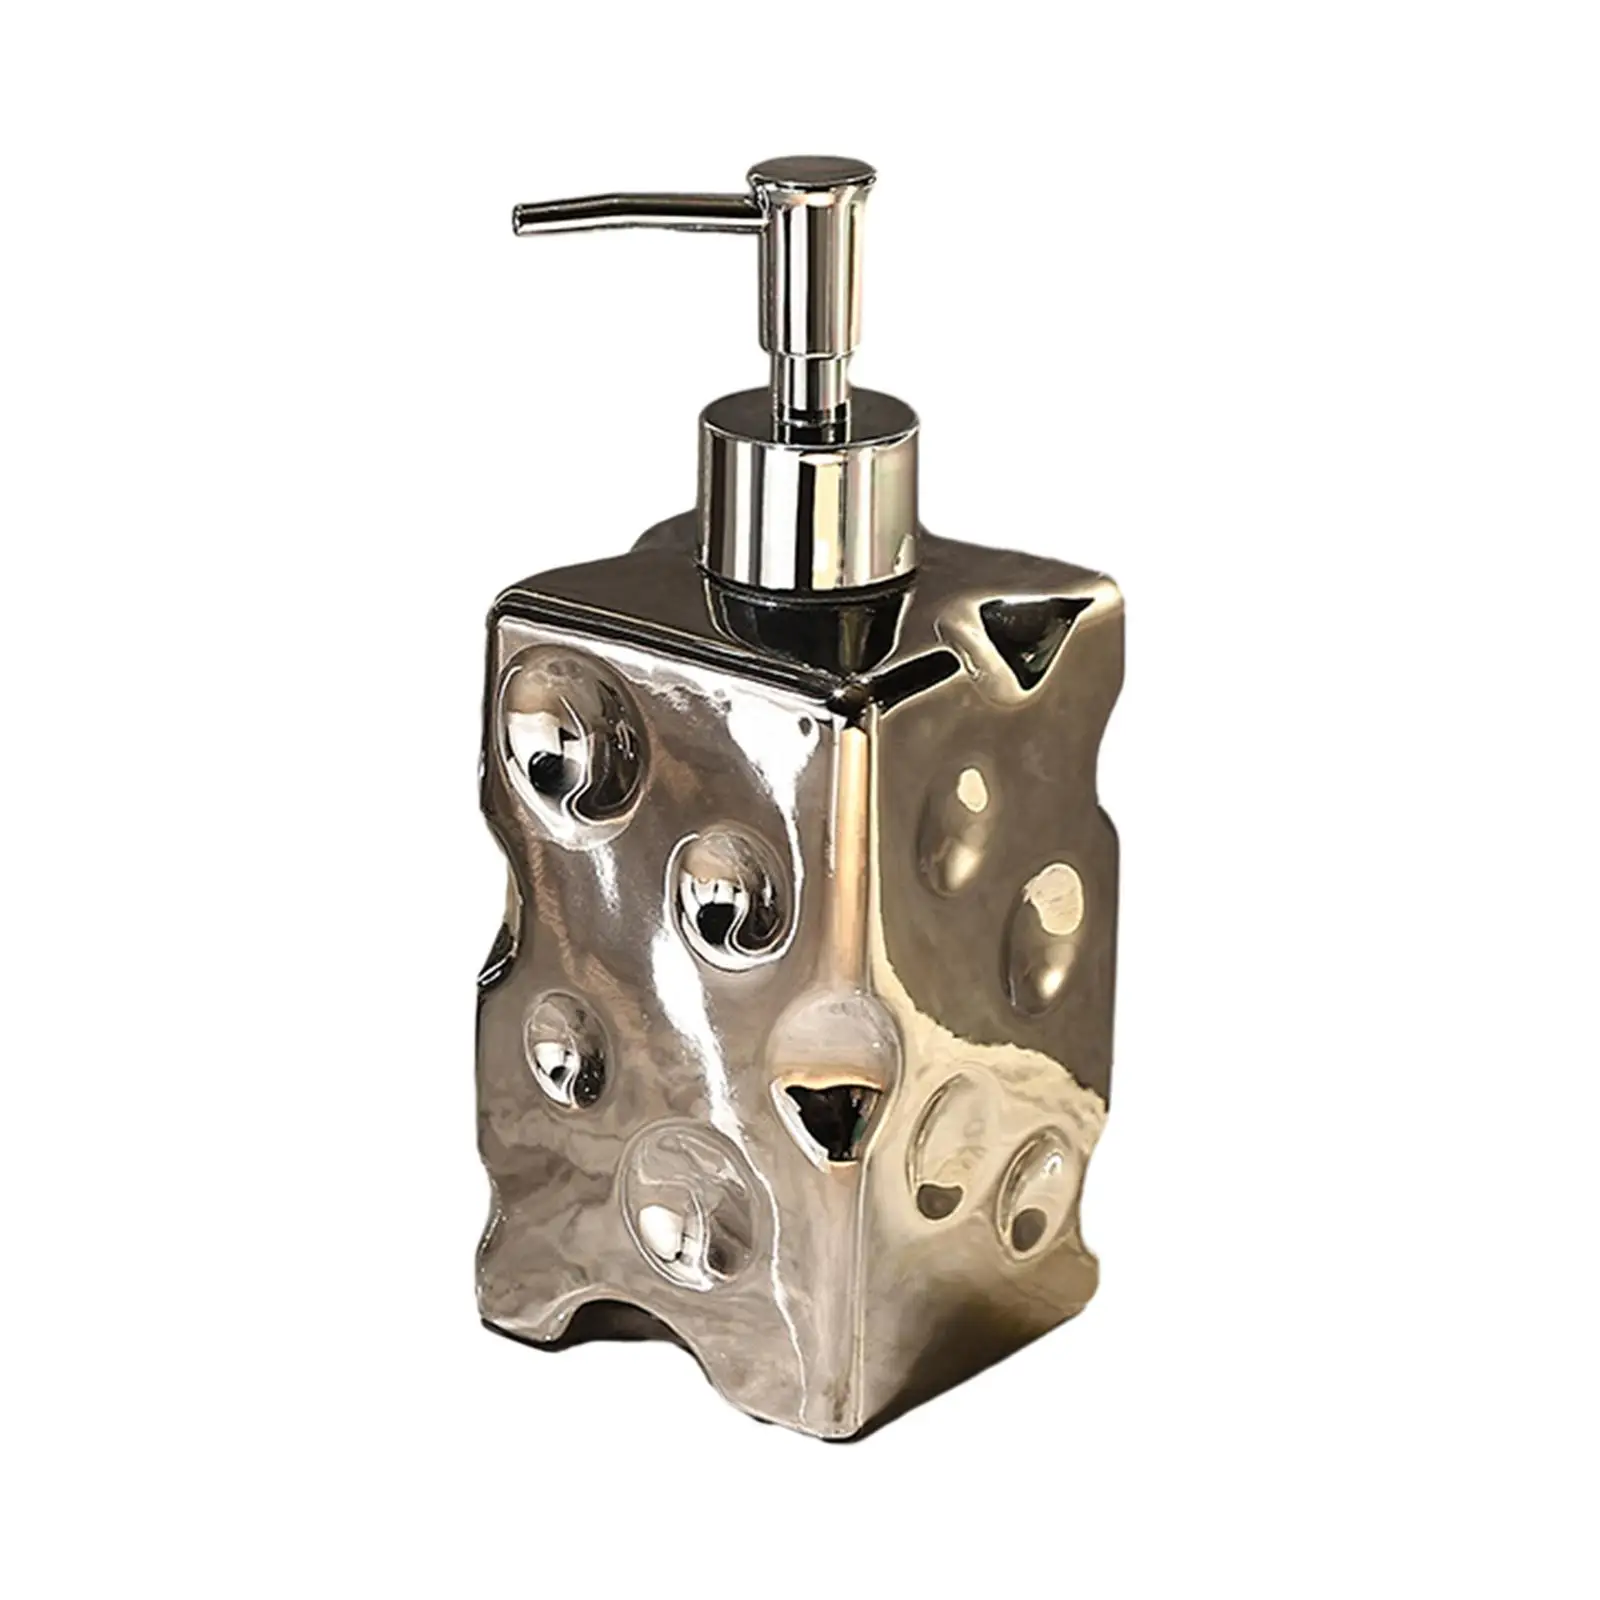 Ceramic Soap Dispenser Easy to Fill Durable Refillable Pump Soap Container for Restaurant Kitchen Bathroom Hotel Farmhouse